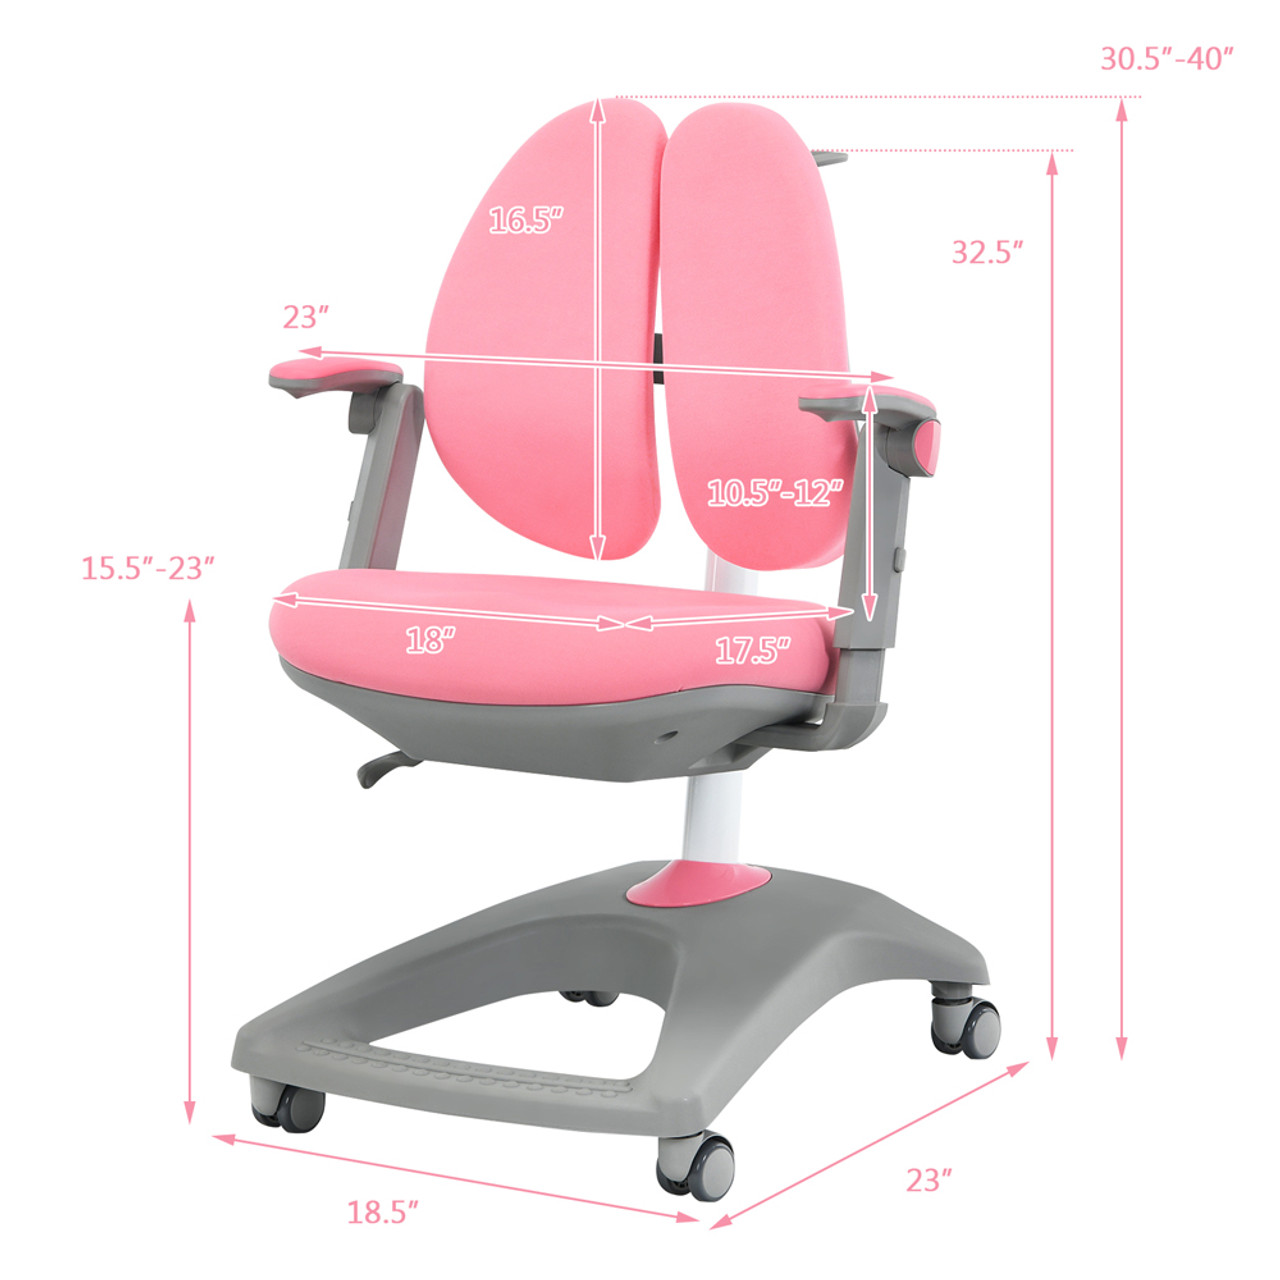 Kids' Ergonomic Rolling Adjustable Desk Chair product image